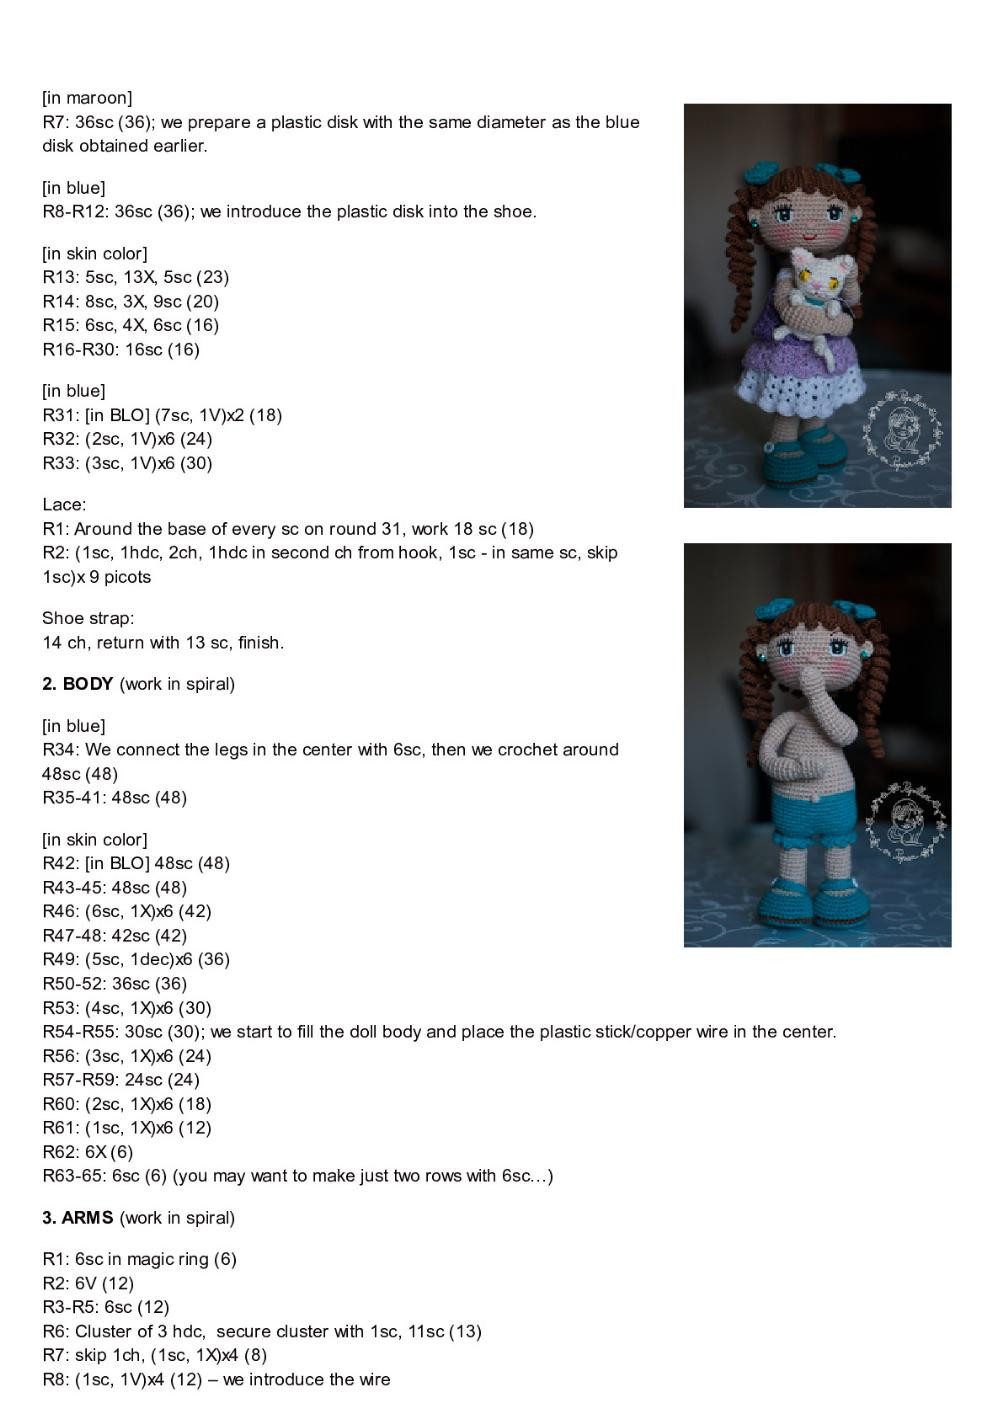 Muneca Alexa / Alexa doll - free crochet / amigurumi doll pattern